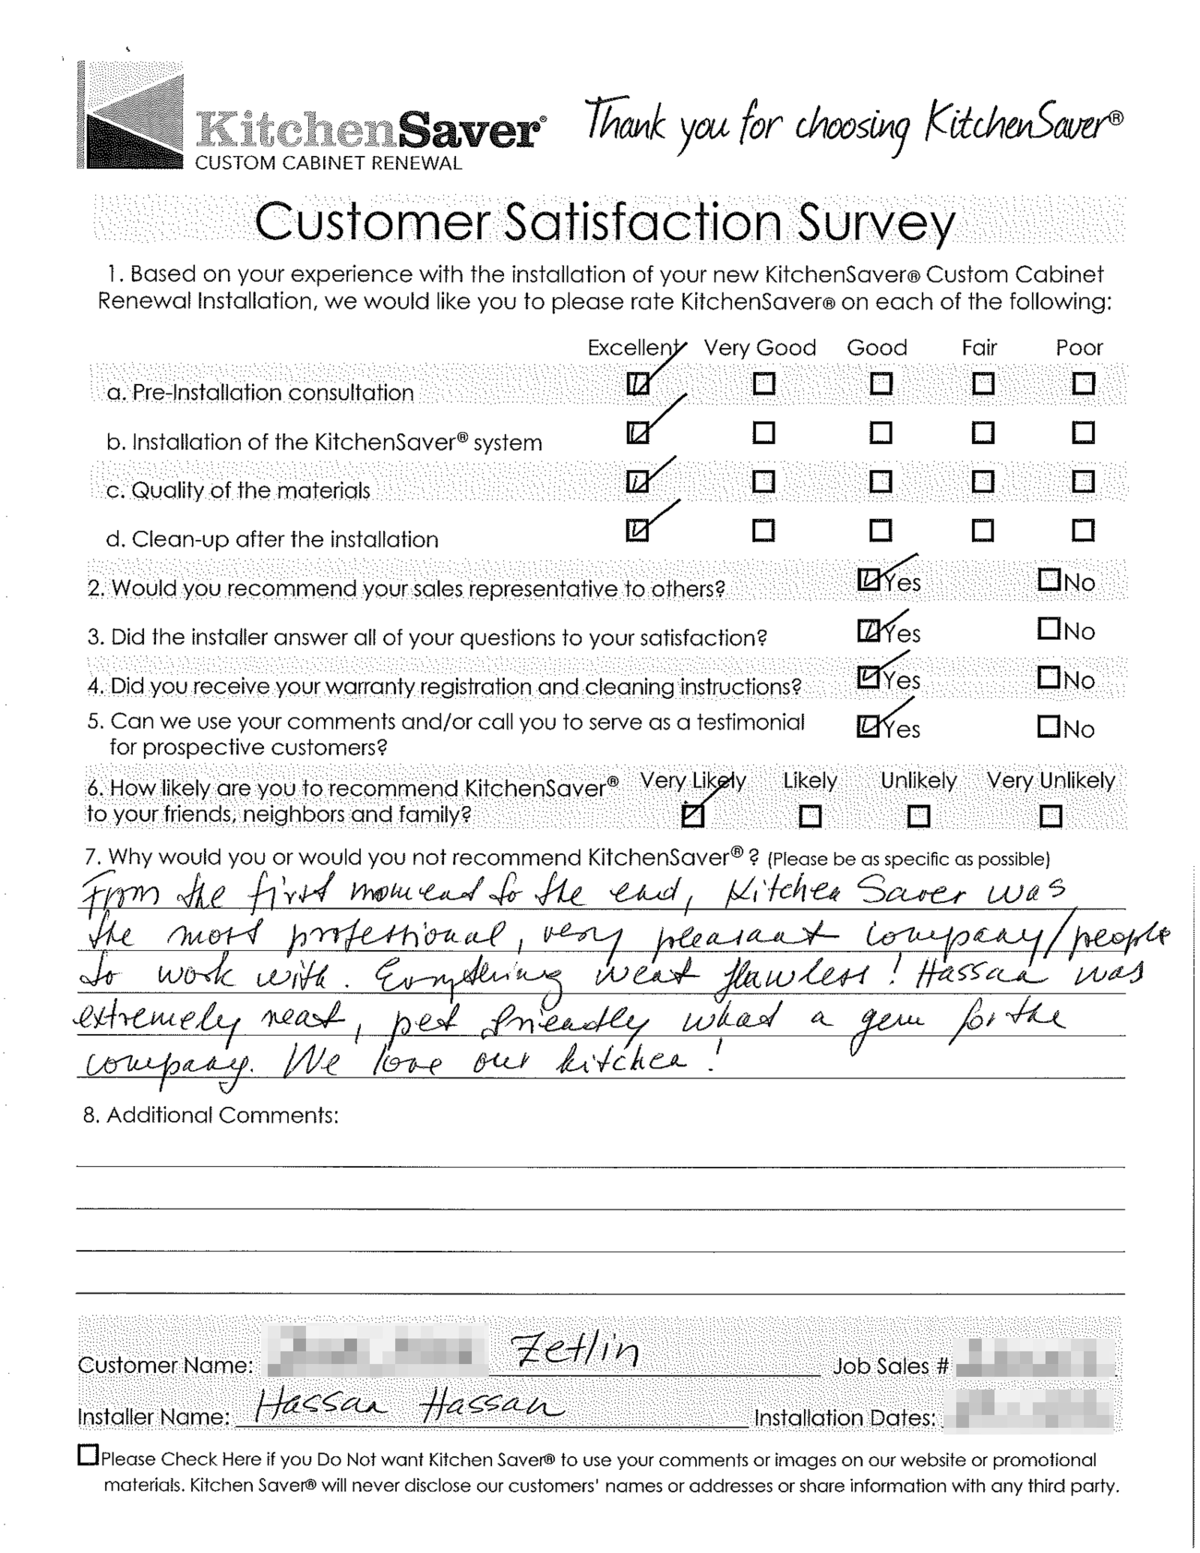  Zetlin Family Satisfaction Survey